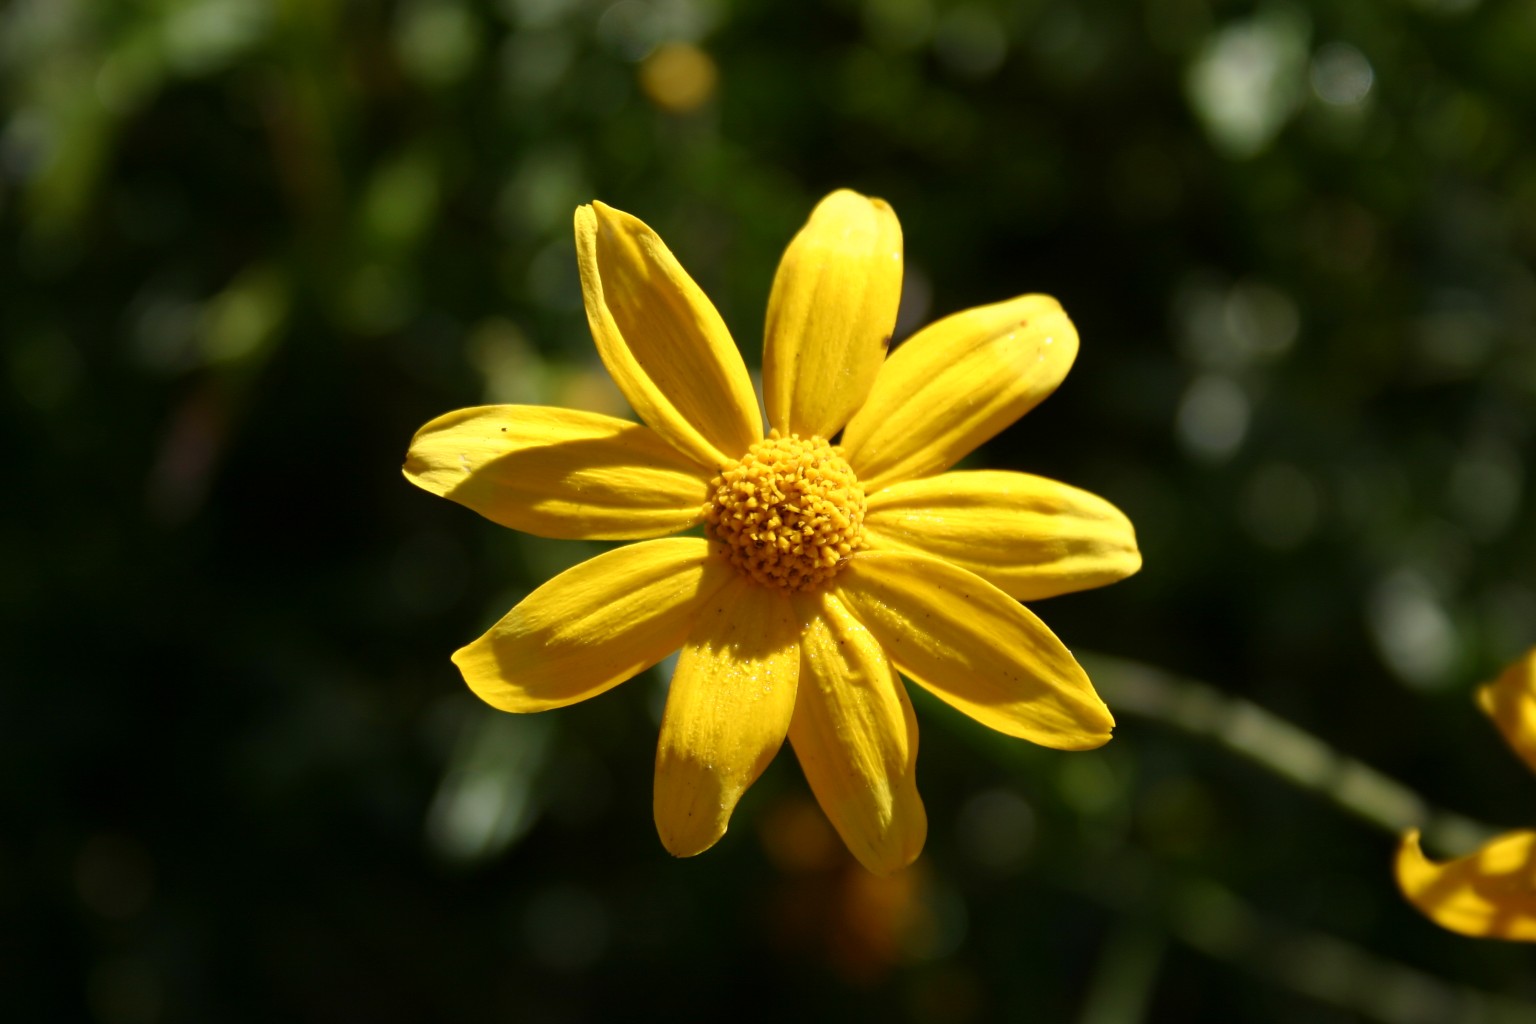 A single yellow, daisy-like flower.